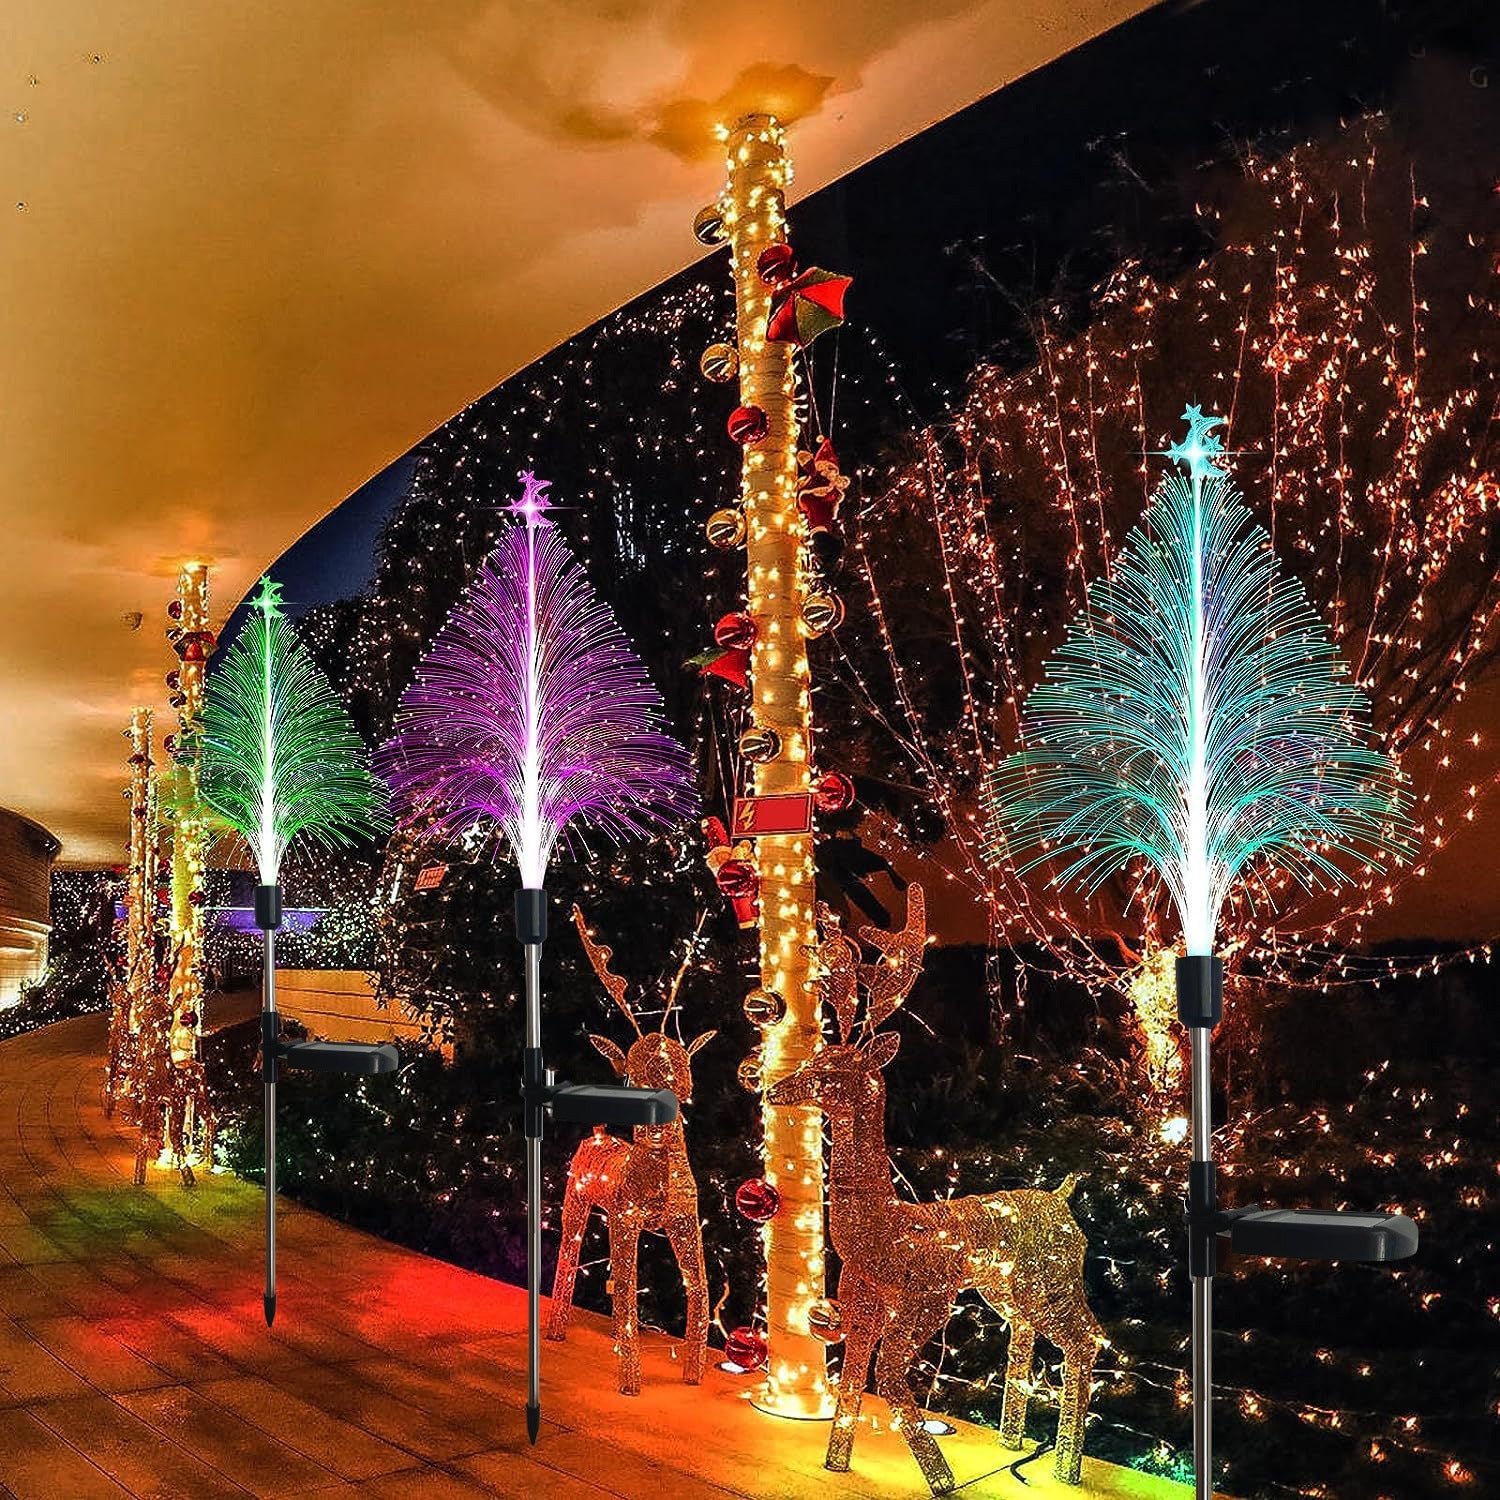 Star Moon Transparent Christmas Tree Solar Light Outdoor Atmosphere Lighting Outdoor Waterproof Glowing Festival Decorative Lamp